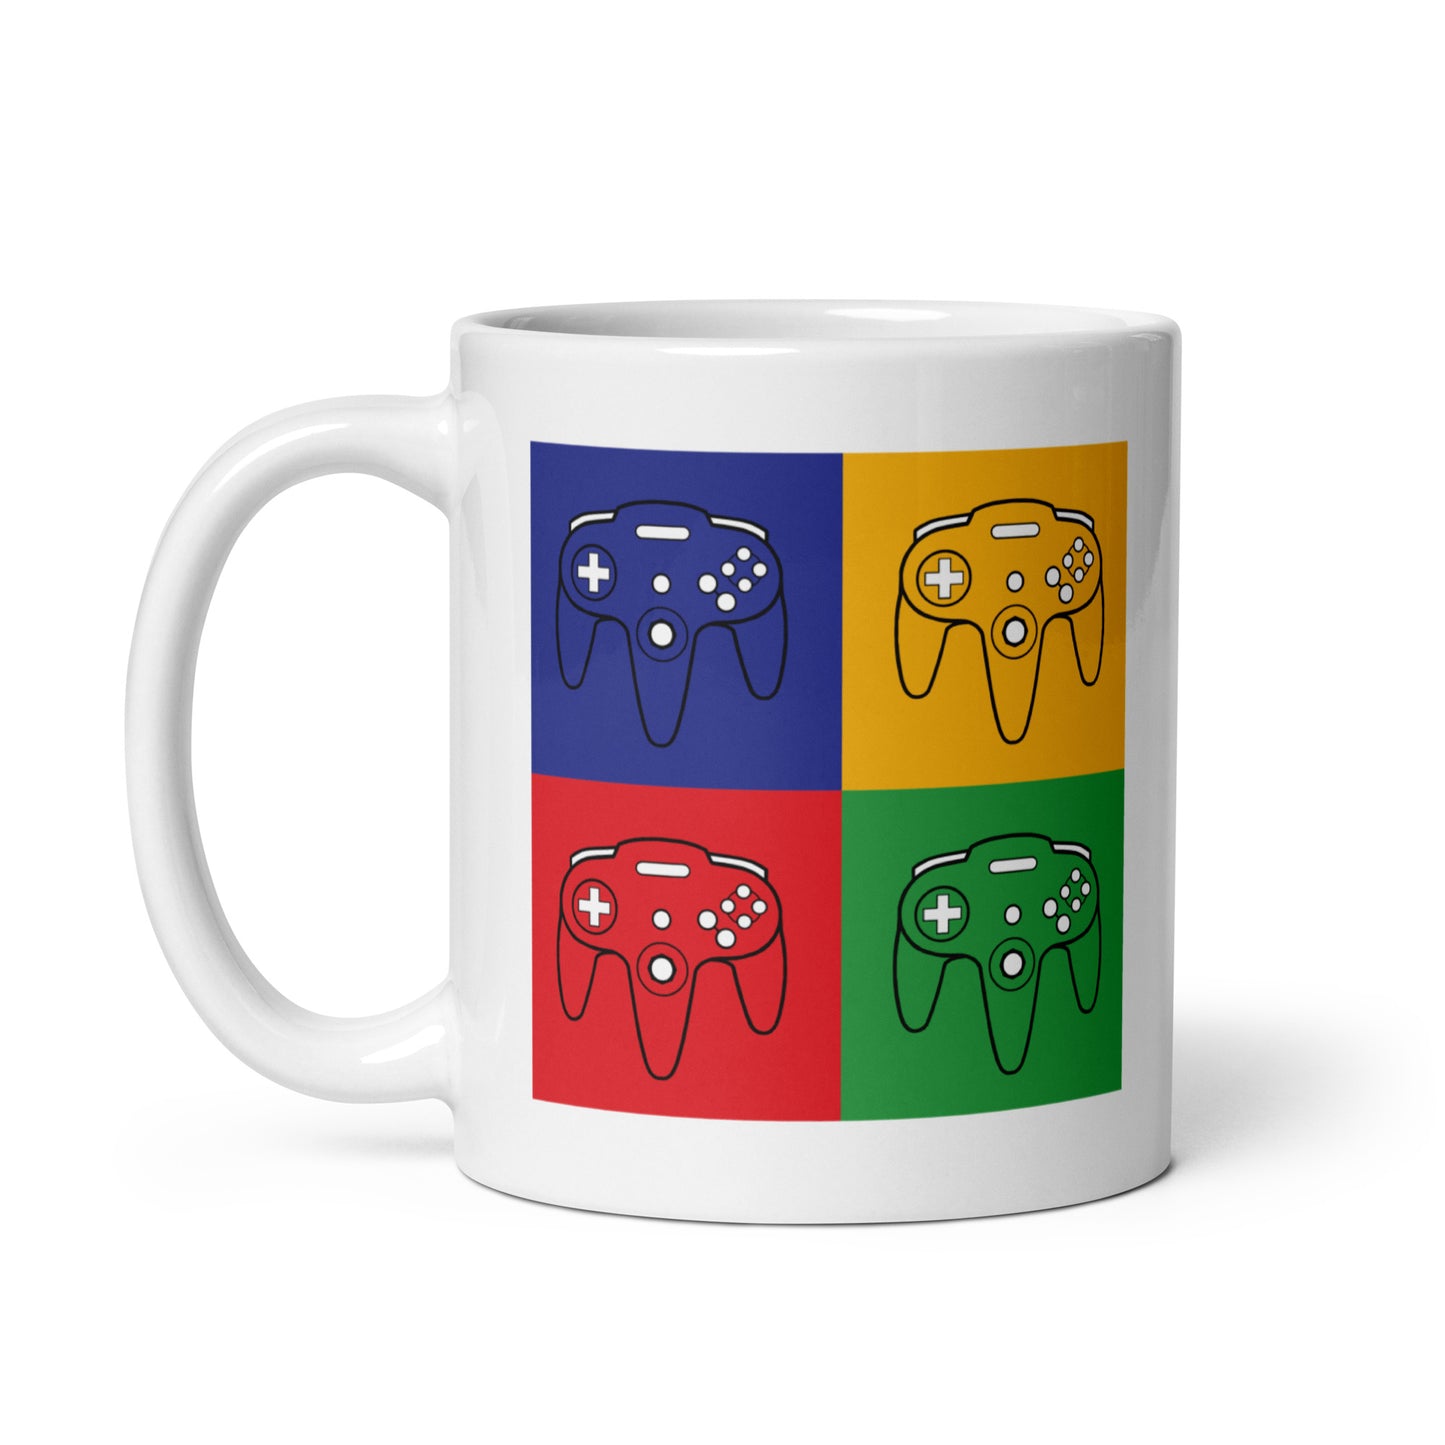 4 Play glossy mug